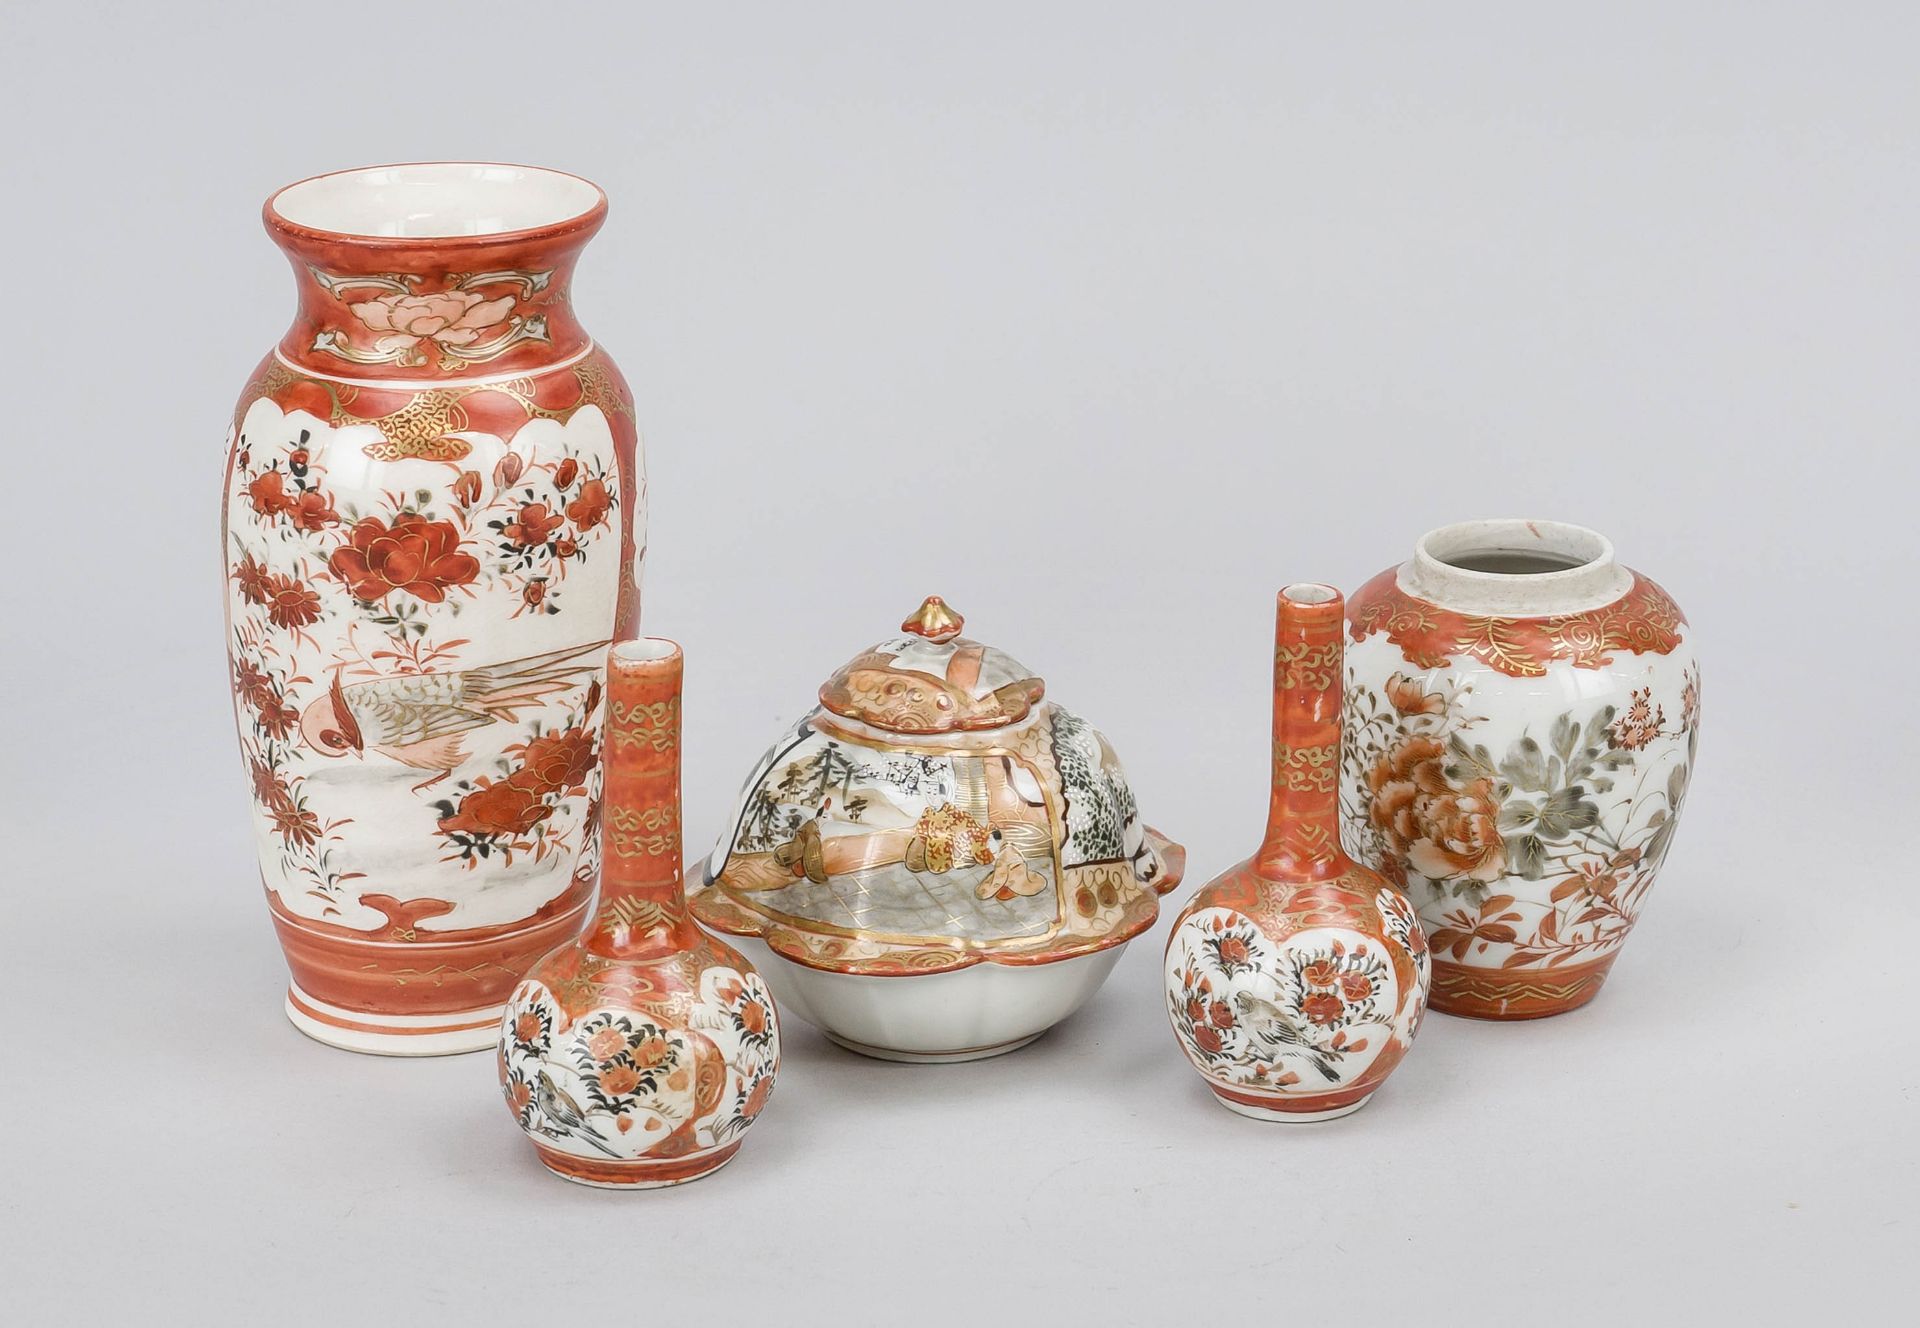 5 pieces porcelain, Japan (Kutani) c. 1900 (Meiji). Pair of small vases, small lidded box, small pot